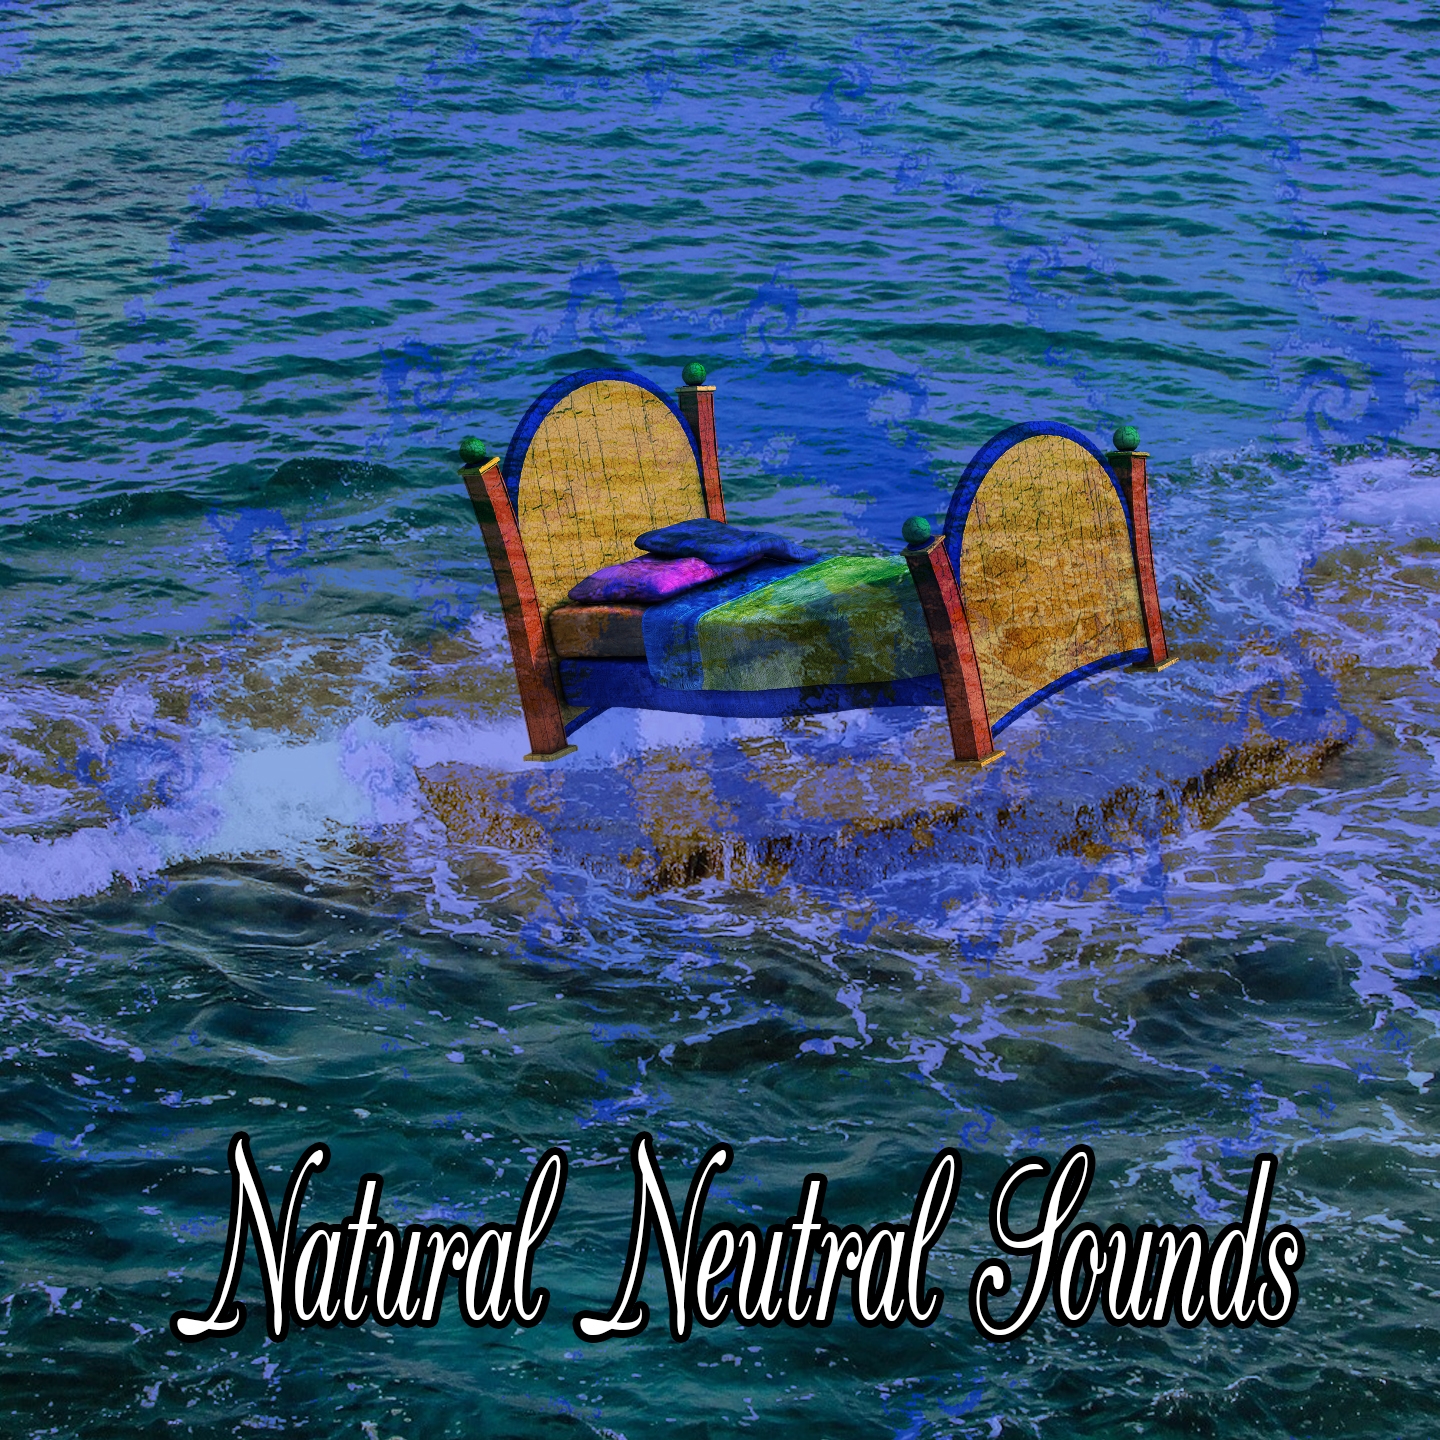 Natural Neutral Sounds